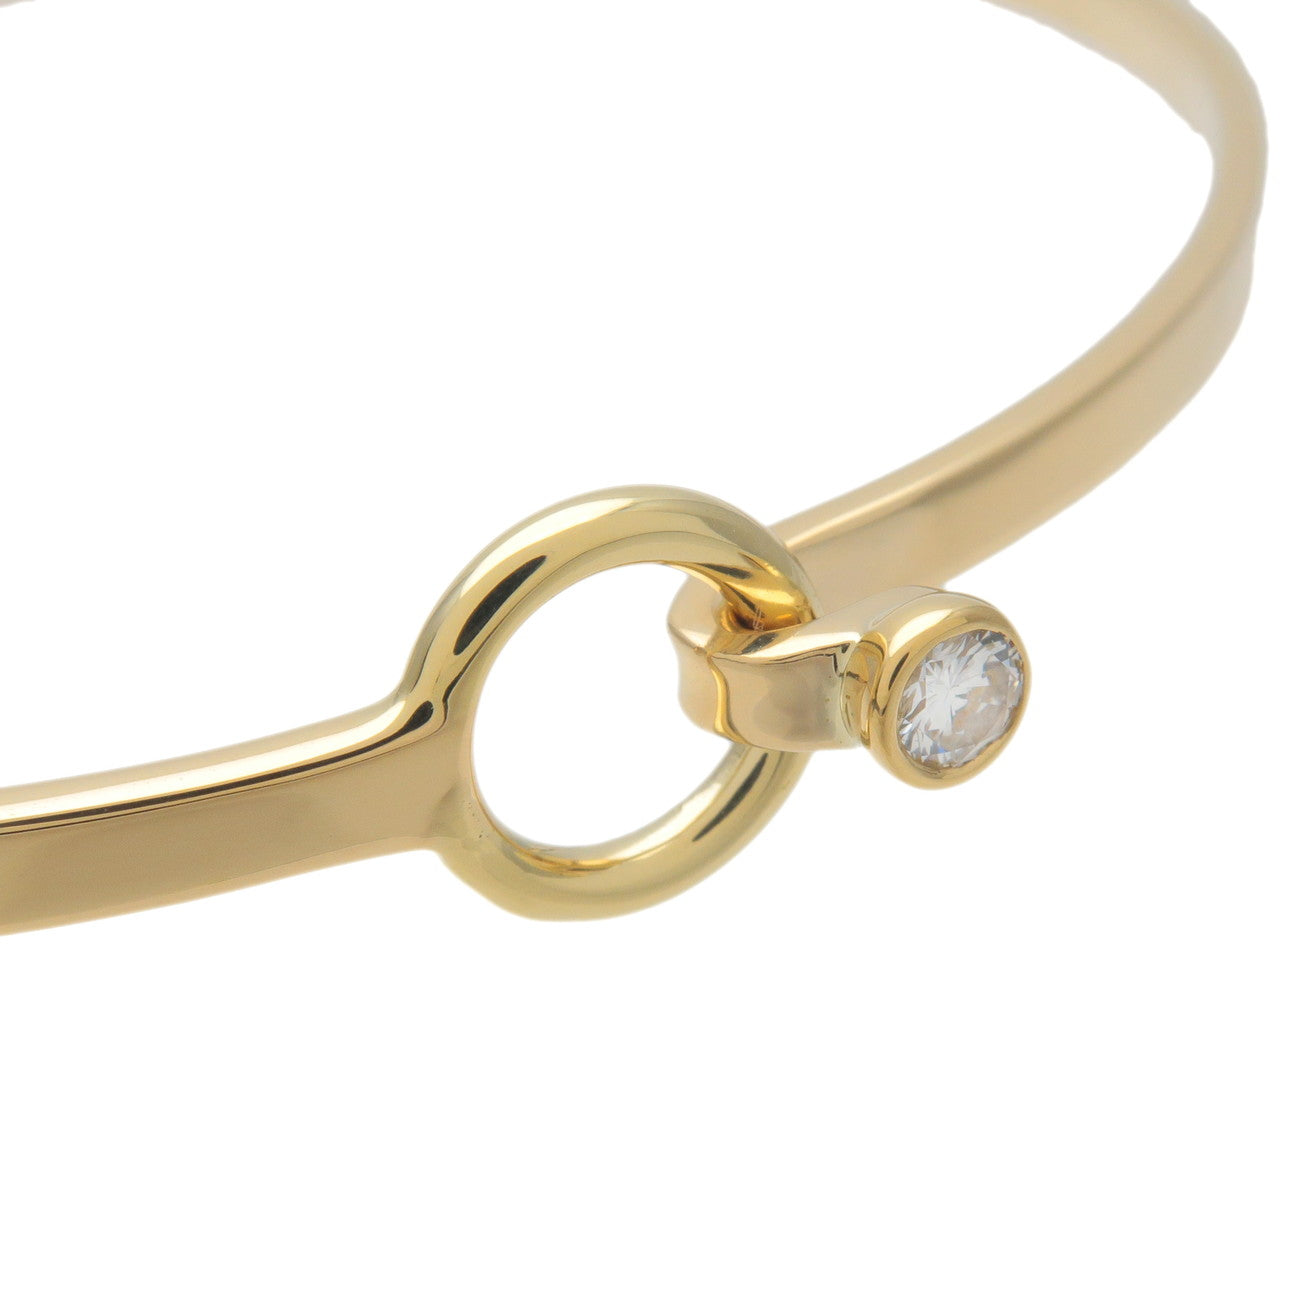 Tiffany&Co. Hook & Eye 1P Diamond Bangle K18YG 750 Yellow Gold